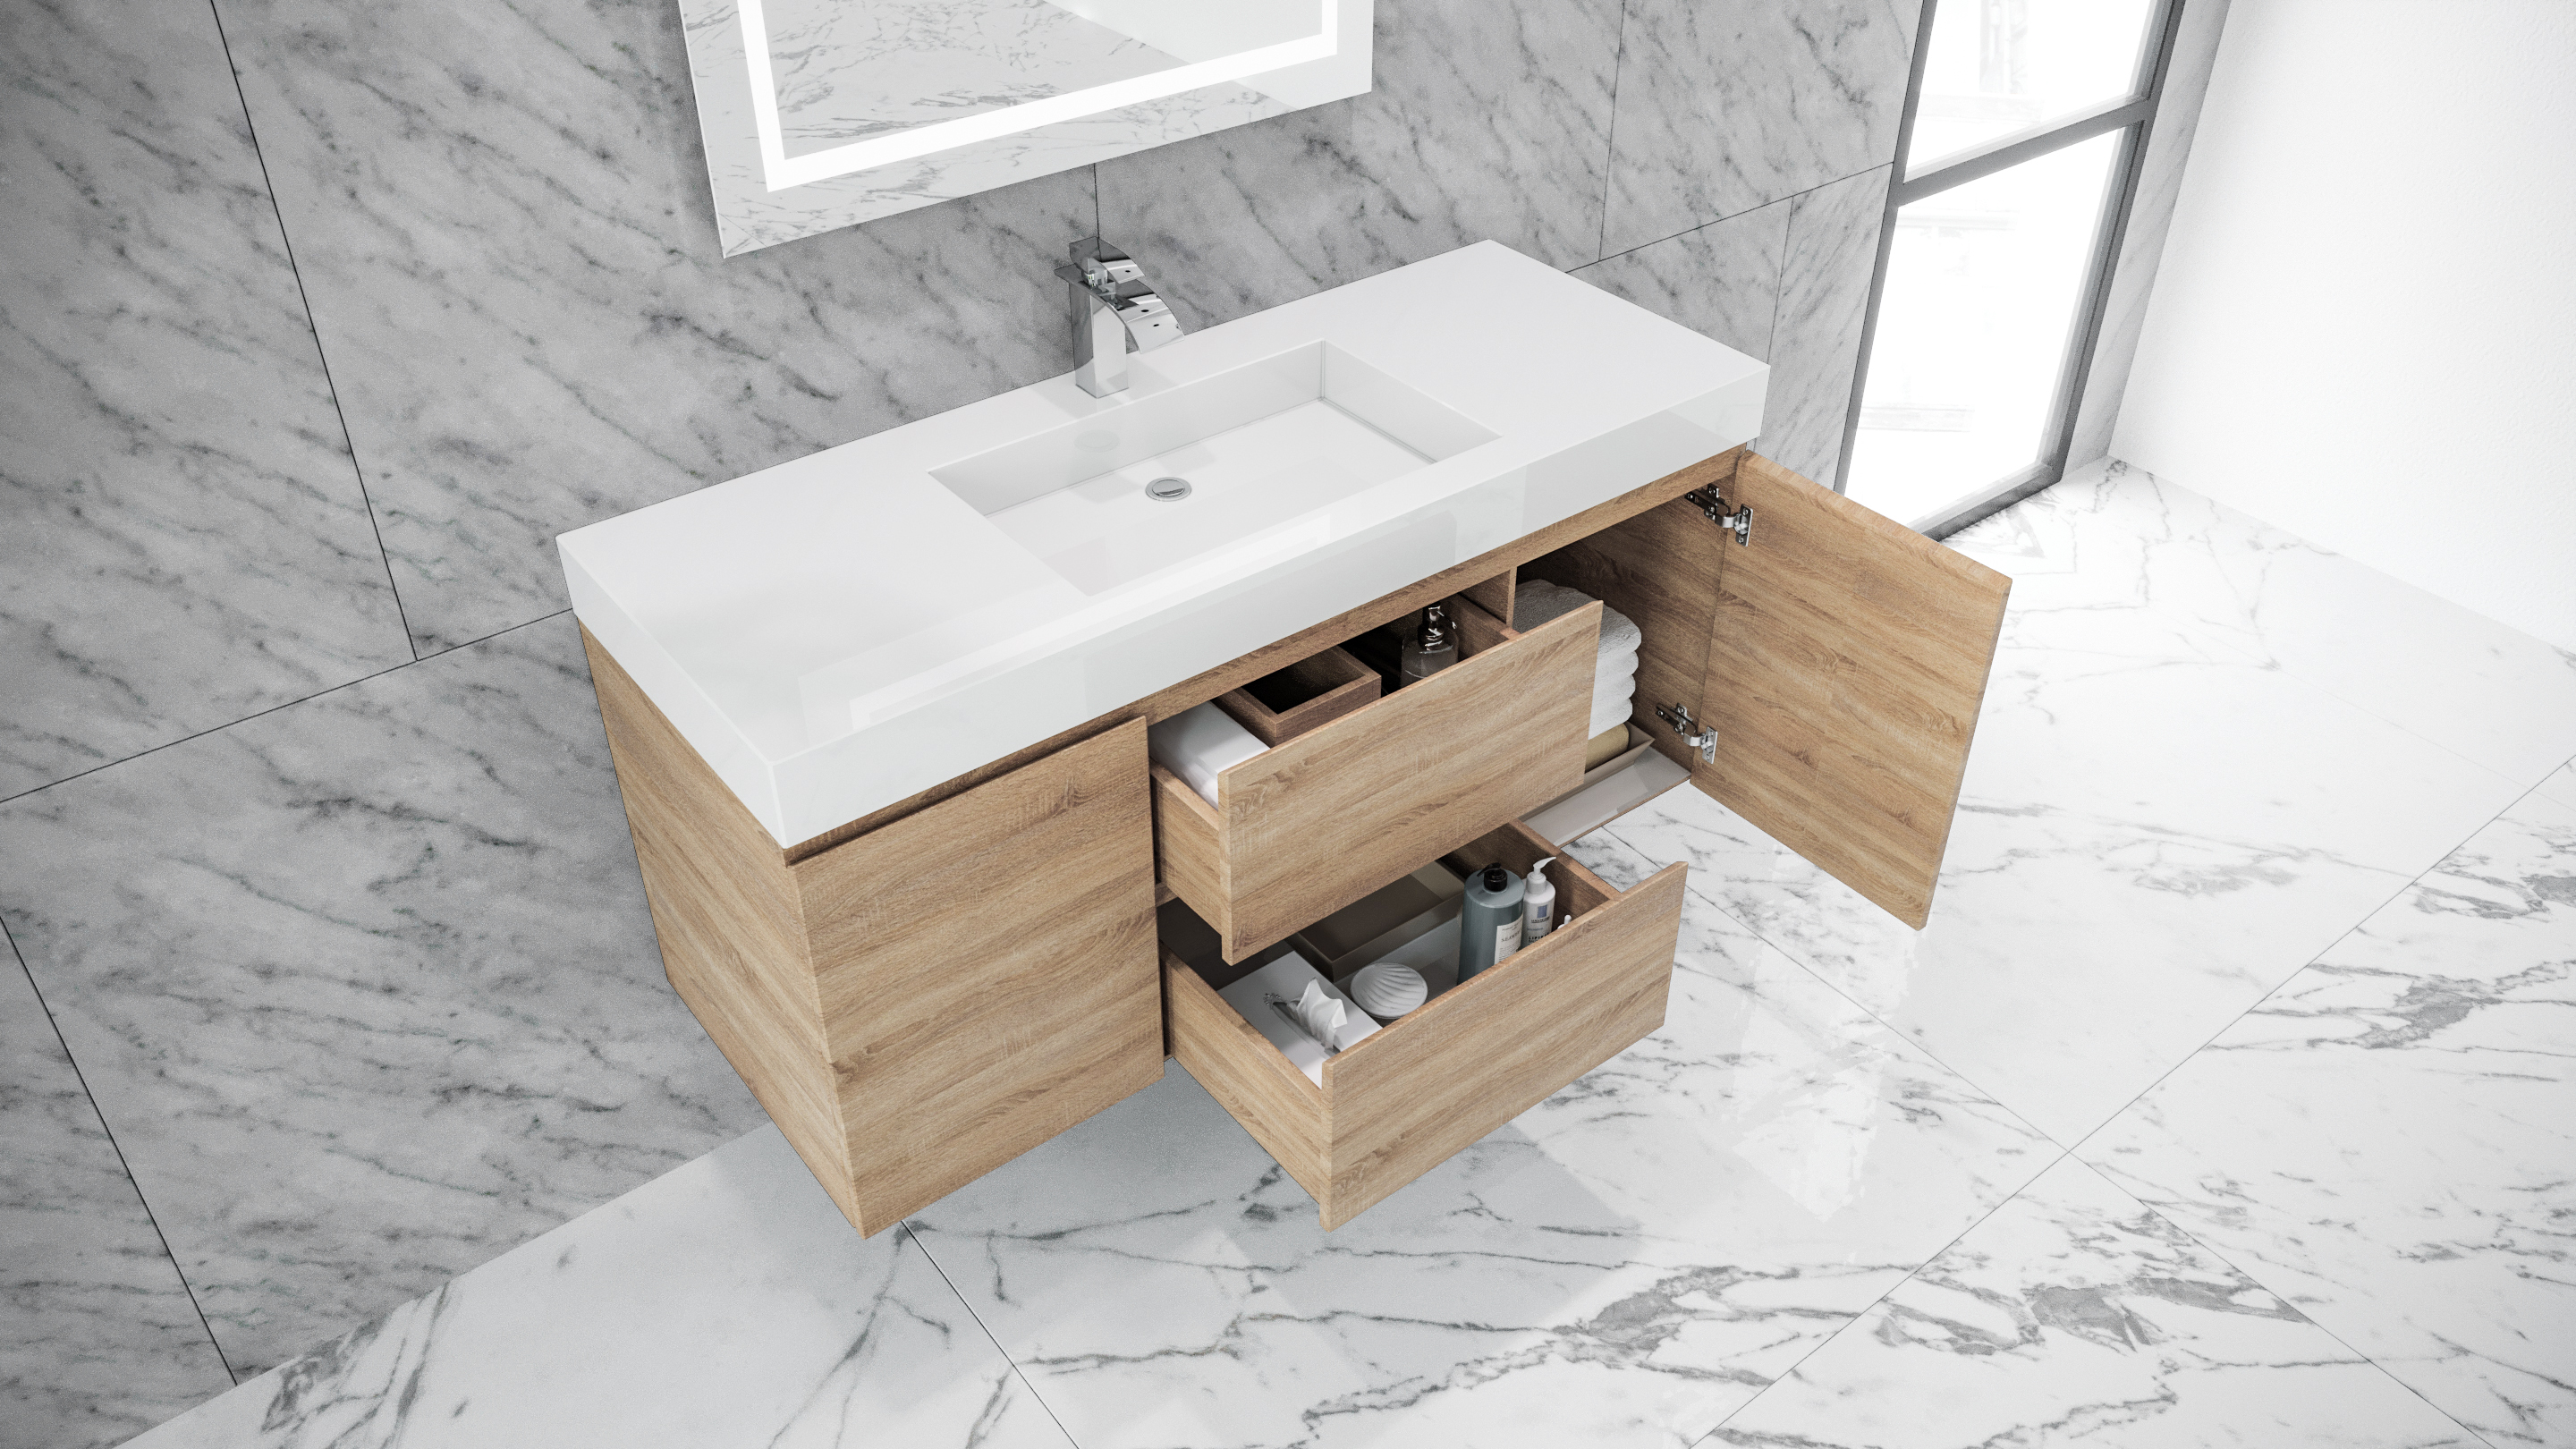 Queen 48 Full Sonoma Wall Mount Single Sink Modern Bathroom Vanity